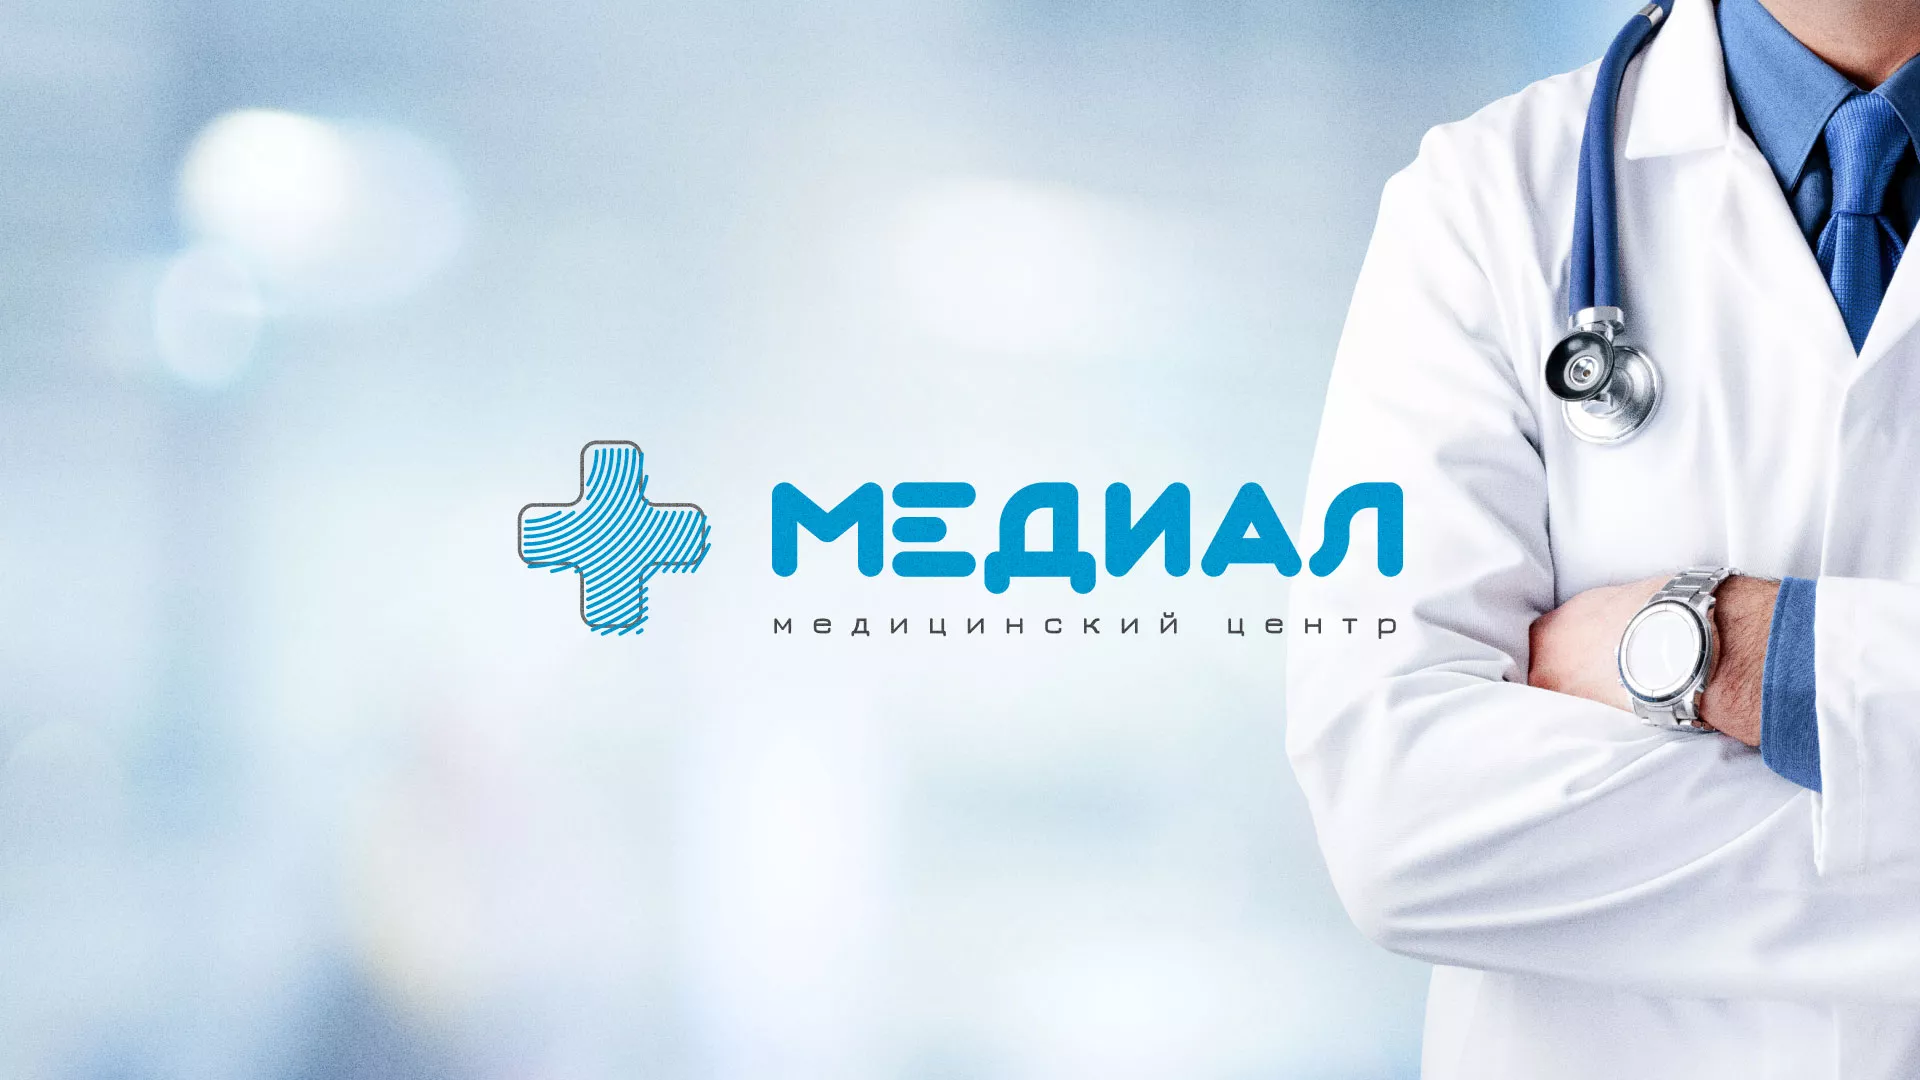 Создание сайта для медицинского центра «Медиал» в Славянске-на-Кубани